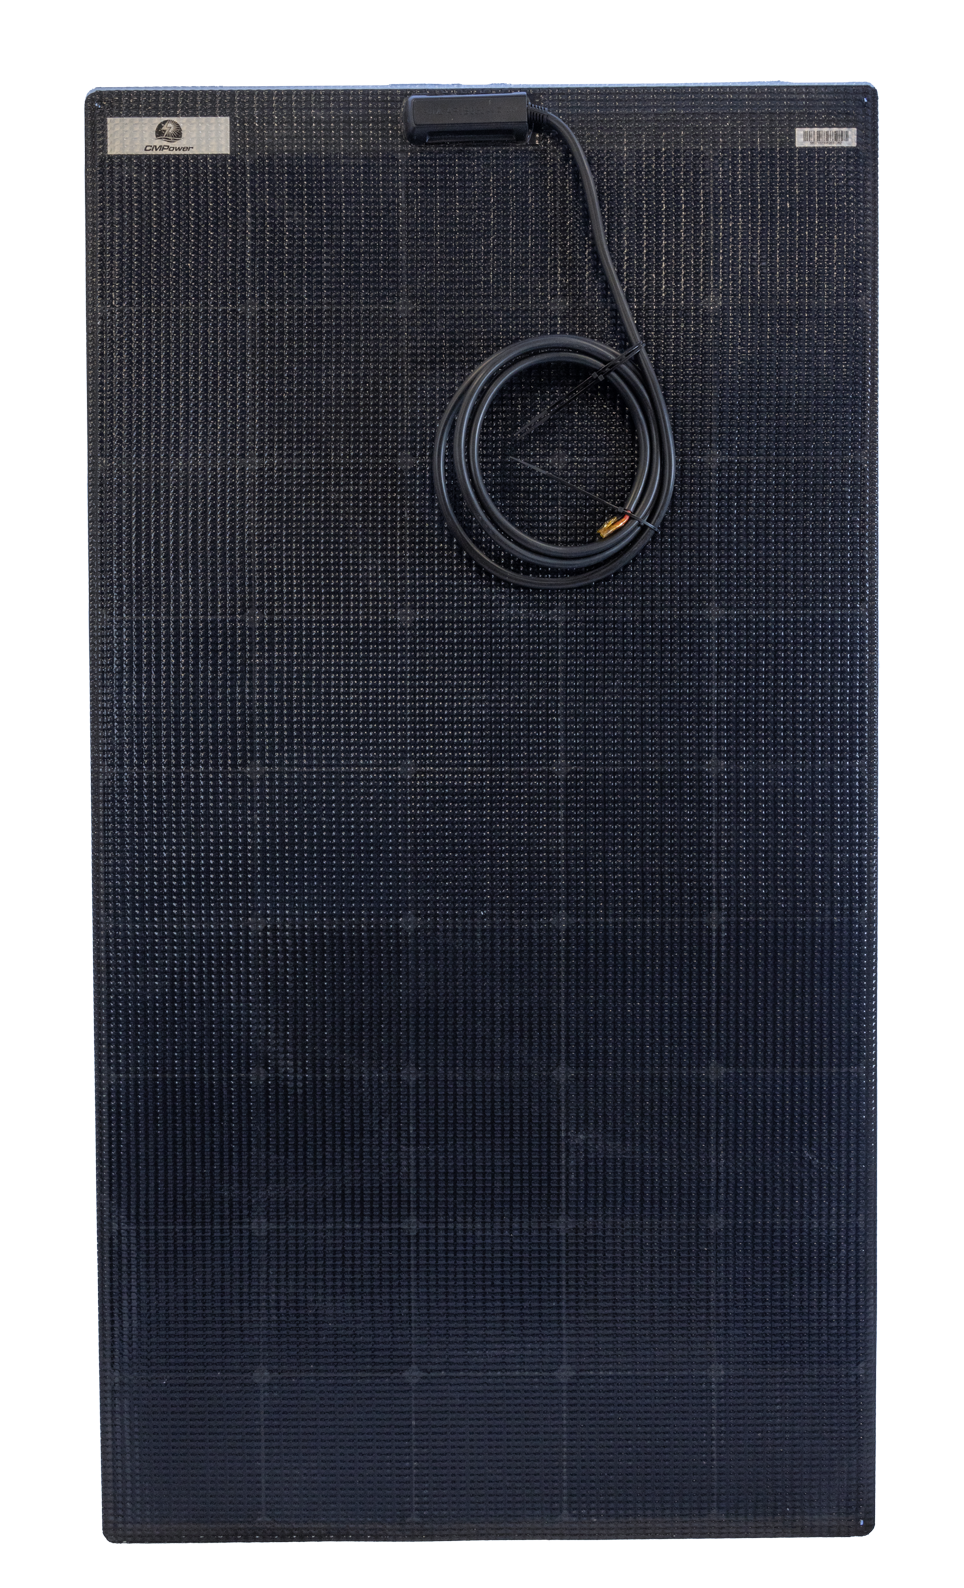 170 Watt Semi-Rigid Walk On Marine Solar Panel - Premium A+ Grade SunPower Maxeon Solar Cells - Black or White Background - For Boats, Vans